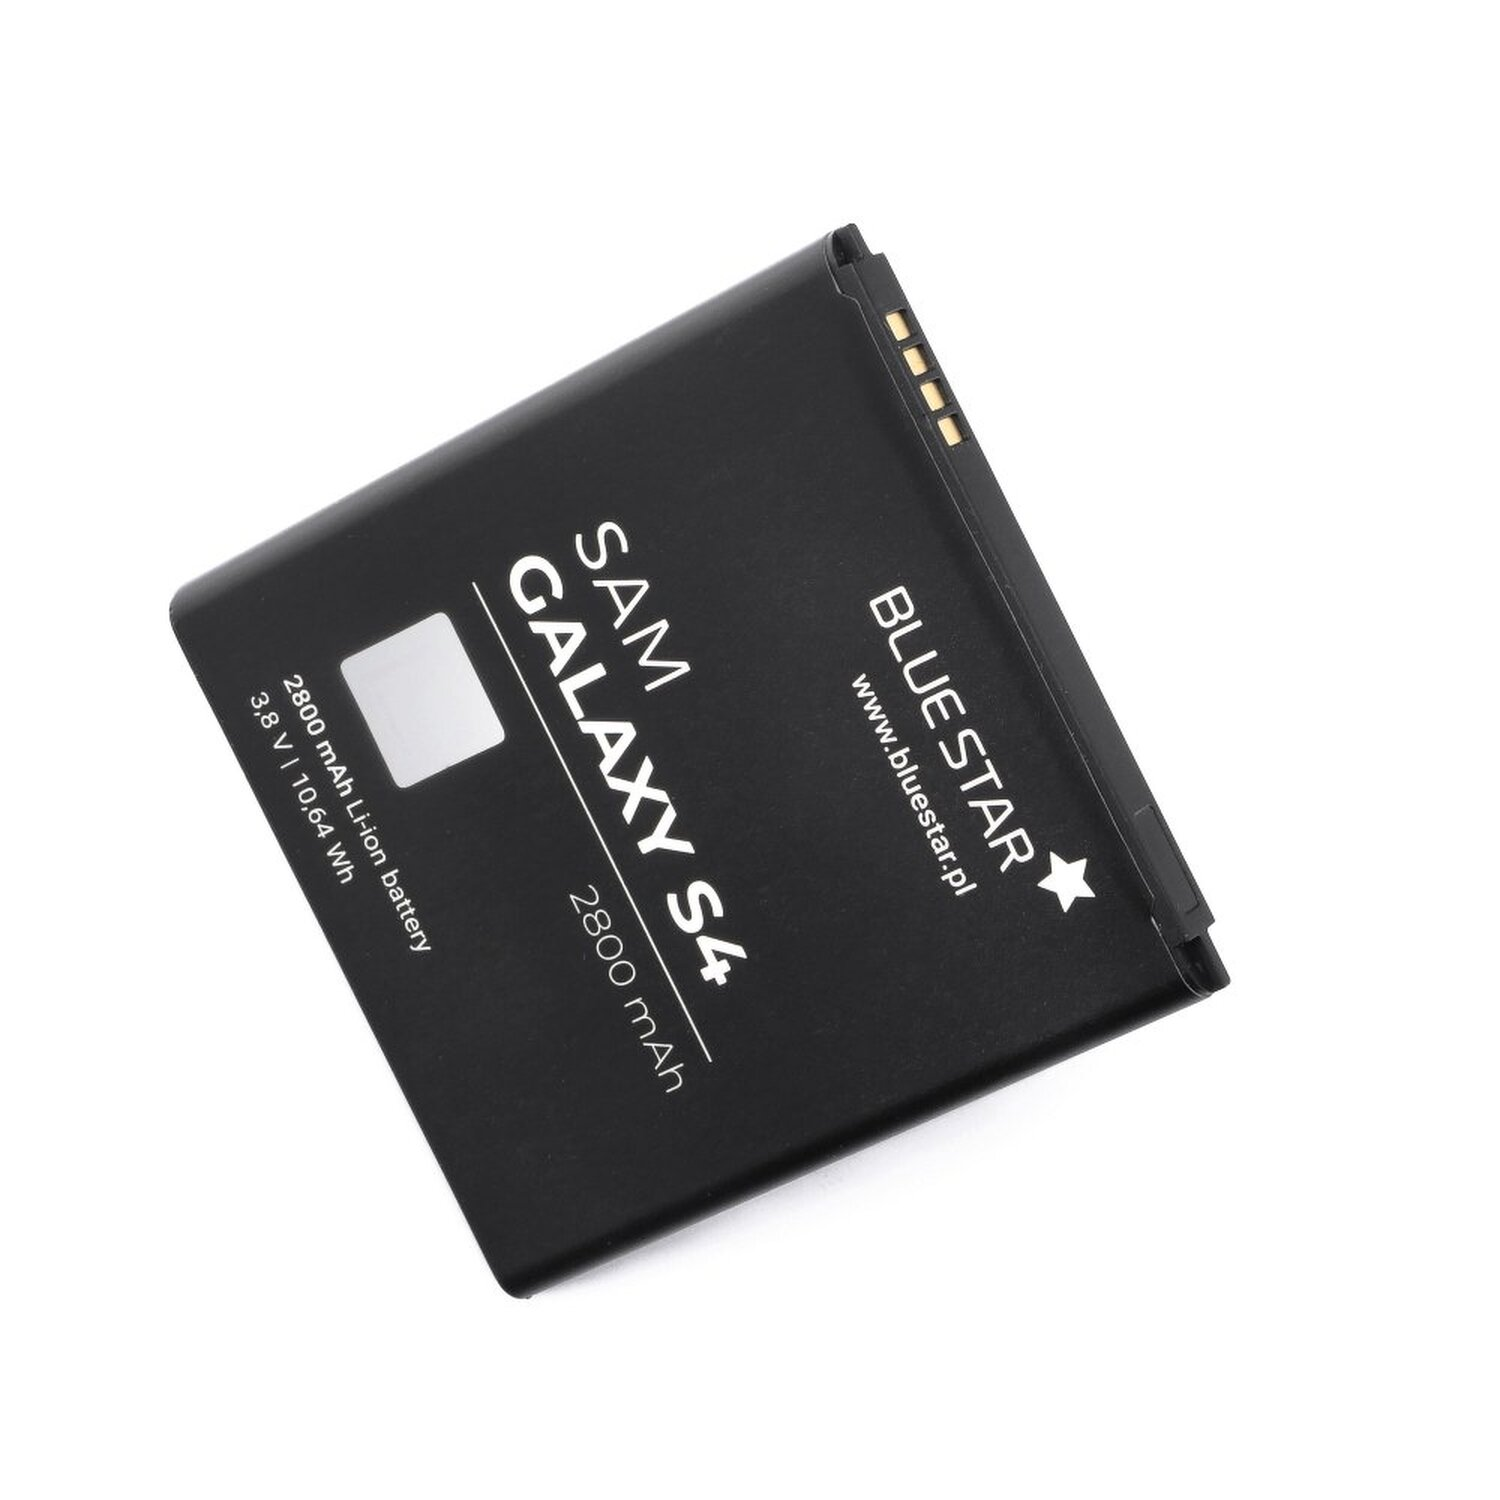 S4 Li-Ion für Galaxy Samsung BLUESTAR Handyakku Akku I9500